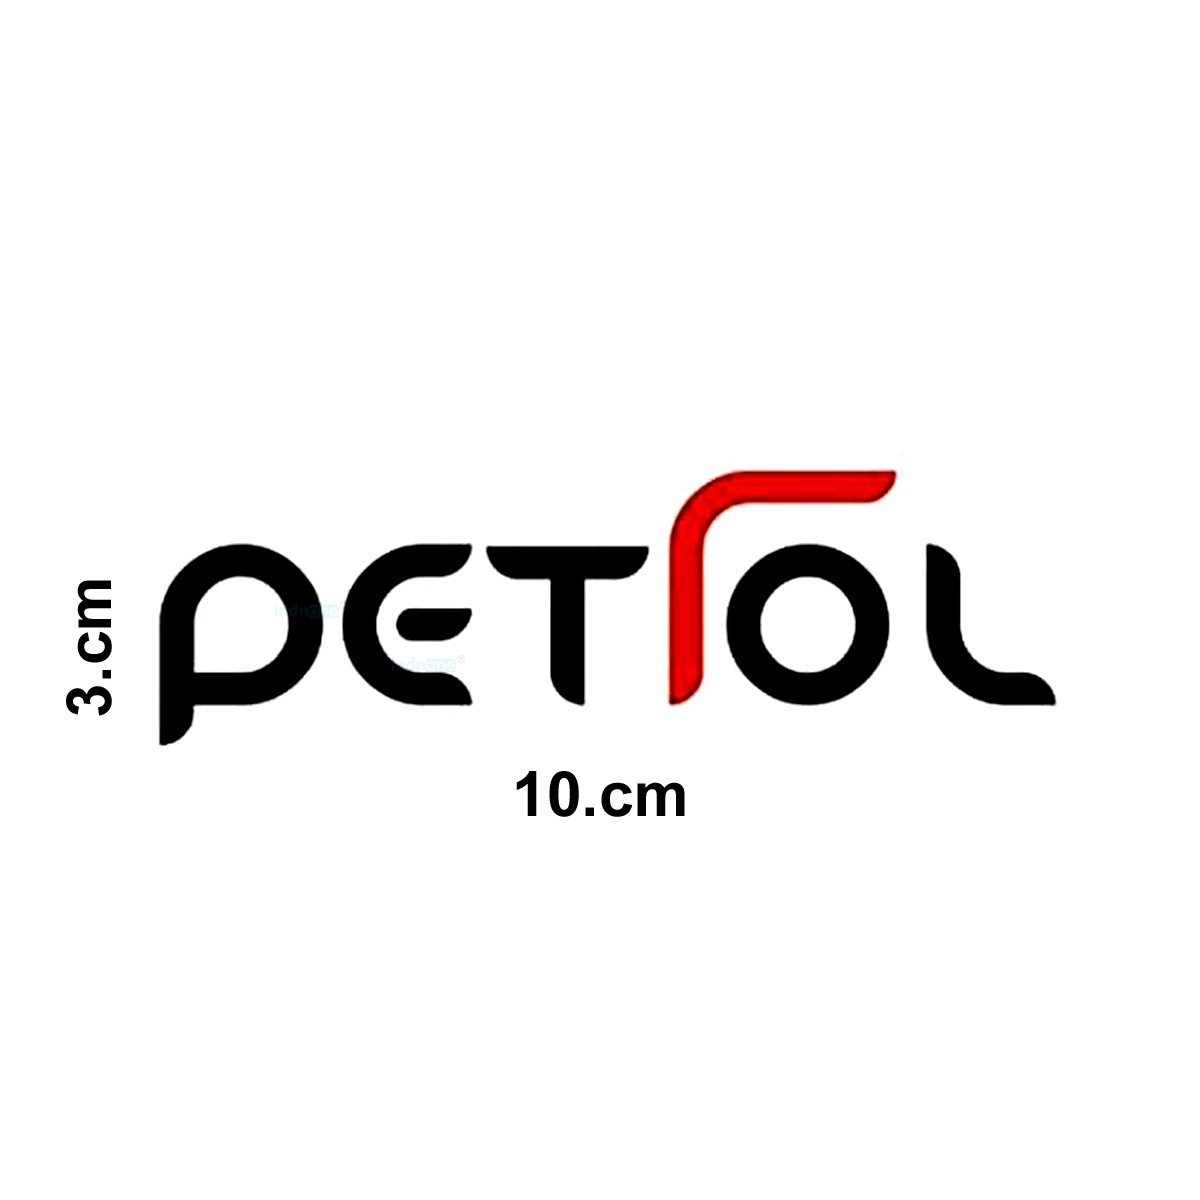 indnone® Logo Petrol Sticker for Car. Car Sticker Stylish Fuel Lid | Red & Black Standard Size